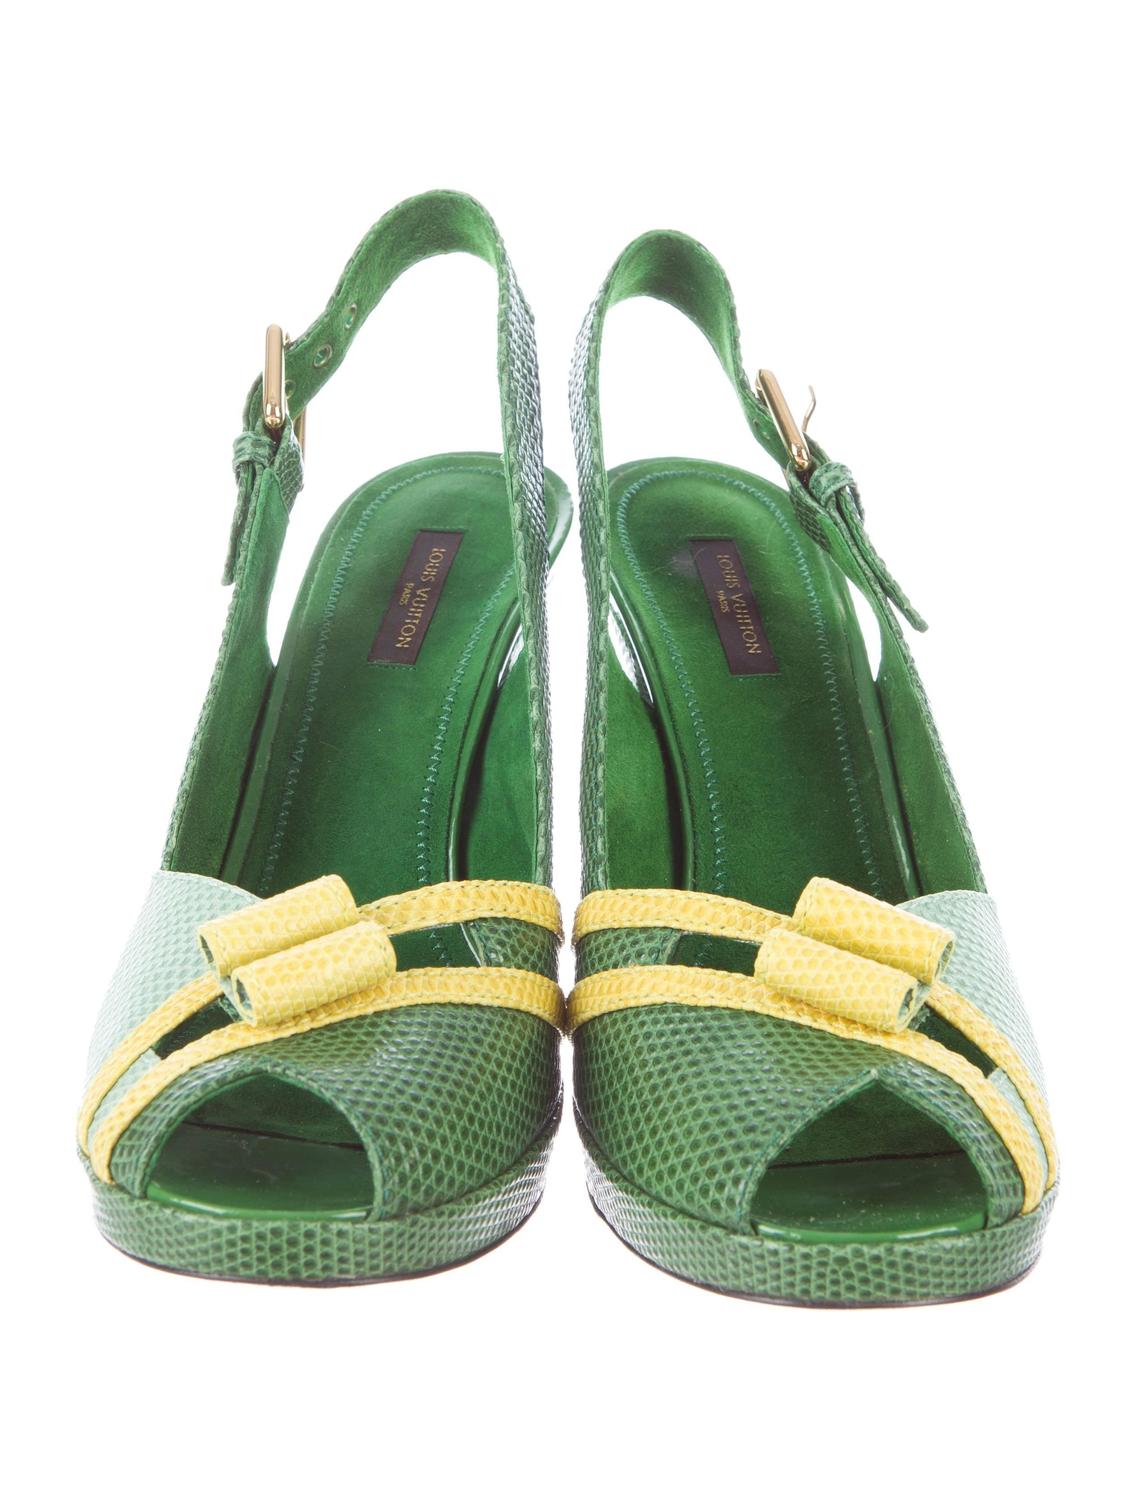 Louis Vuitton Green Yellow Lizard Leather Peep Toe High Heel Pumps in Box at 1stdibs